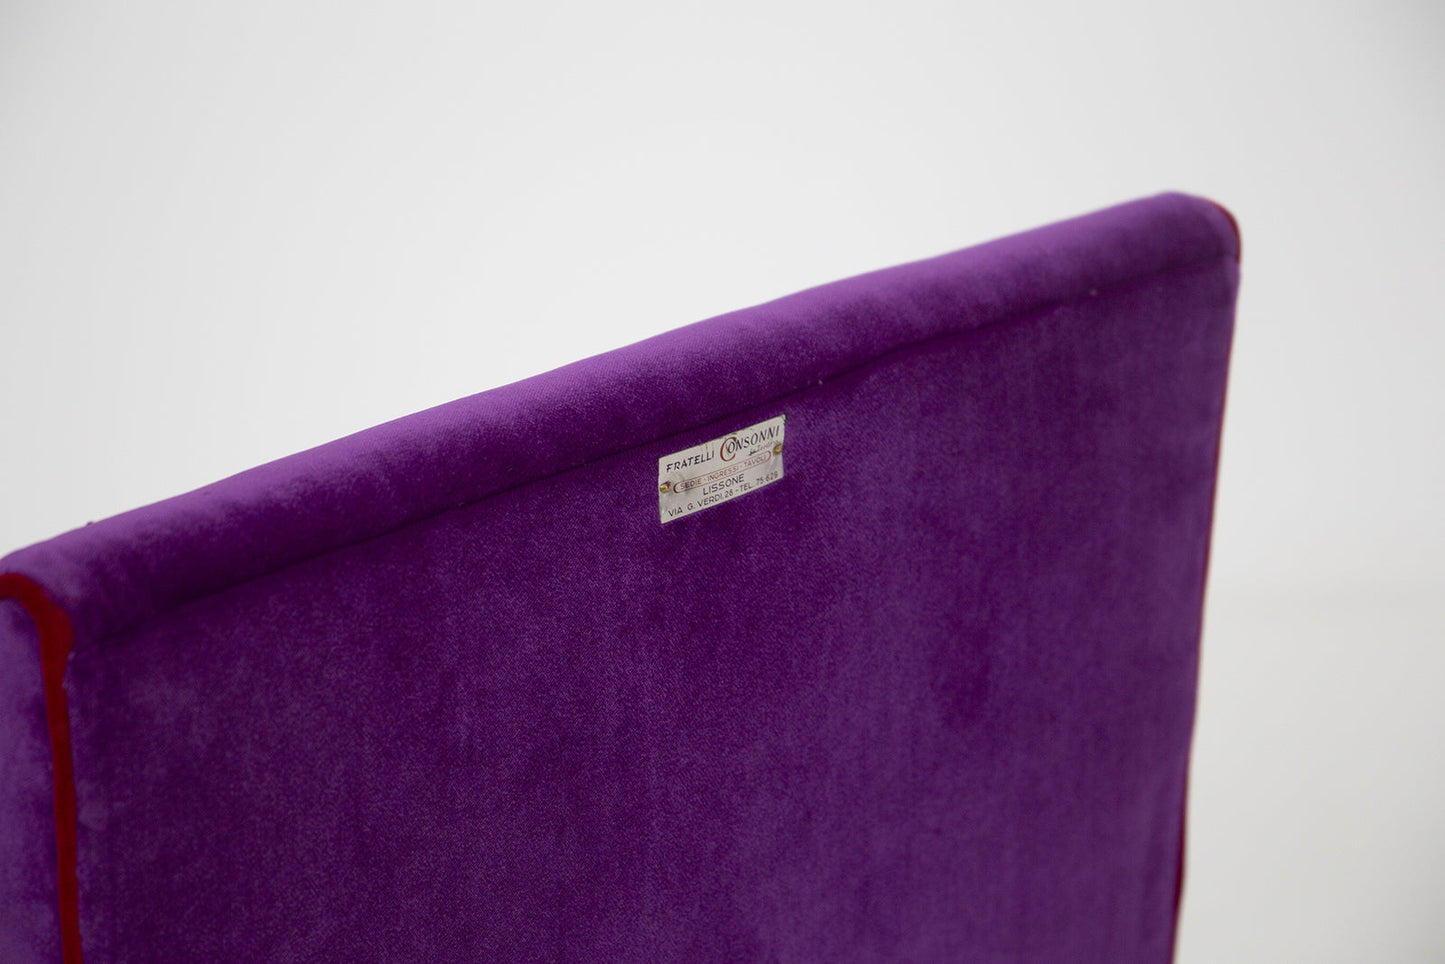 Purple Velvet Armchairs by Fratelli Consonni, 1950s